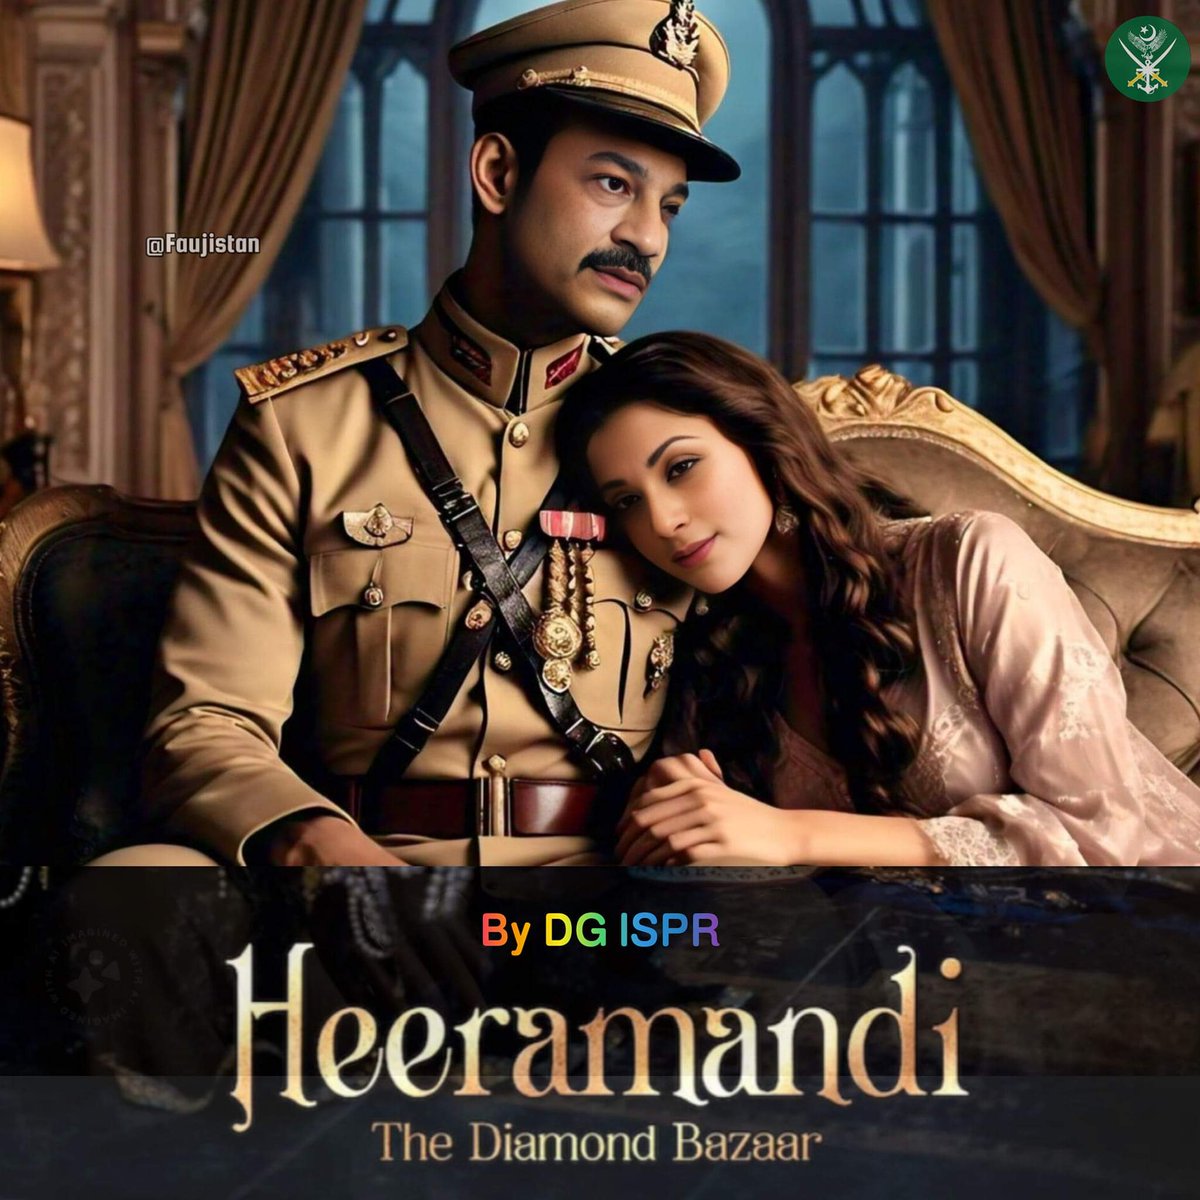 DG ISPR presents Heera Mandi, a film starring General Asim Munir and Maryam Nawaz, hitting theaters on May 9th.